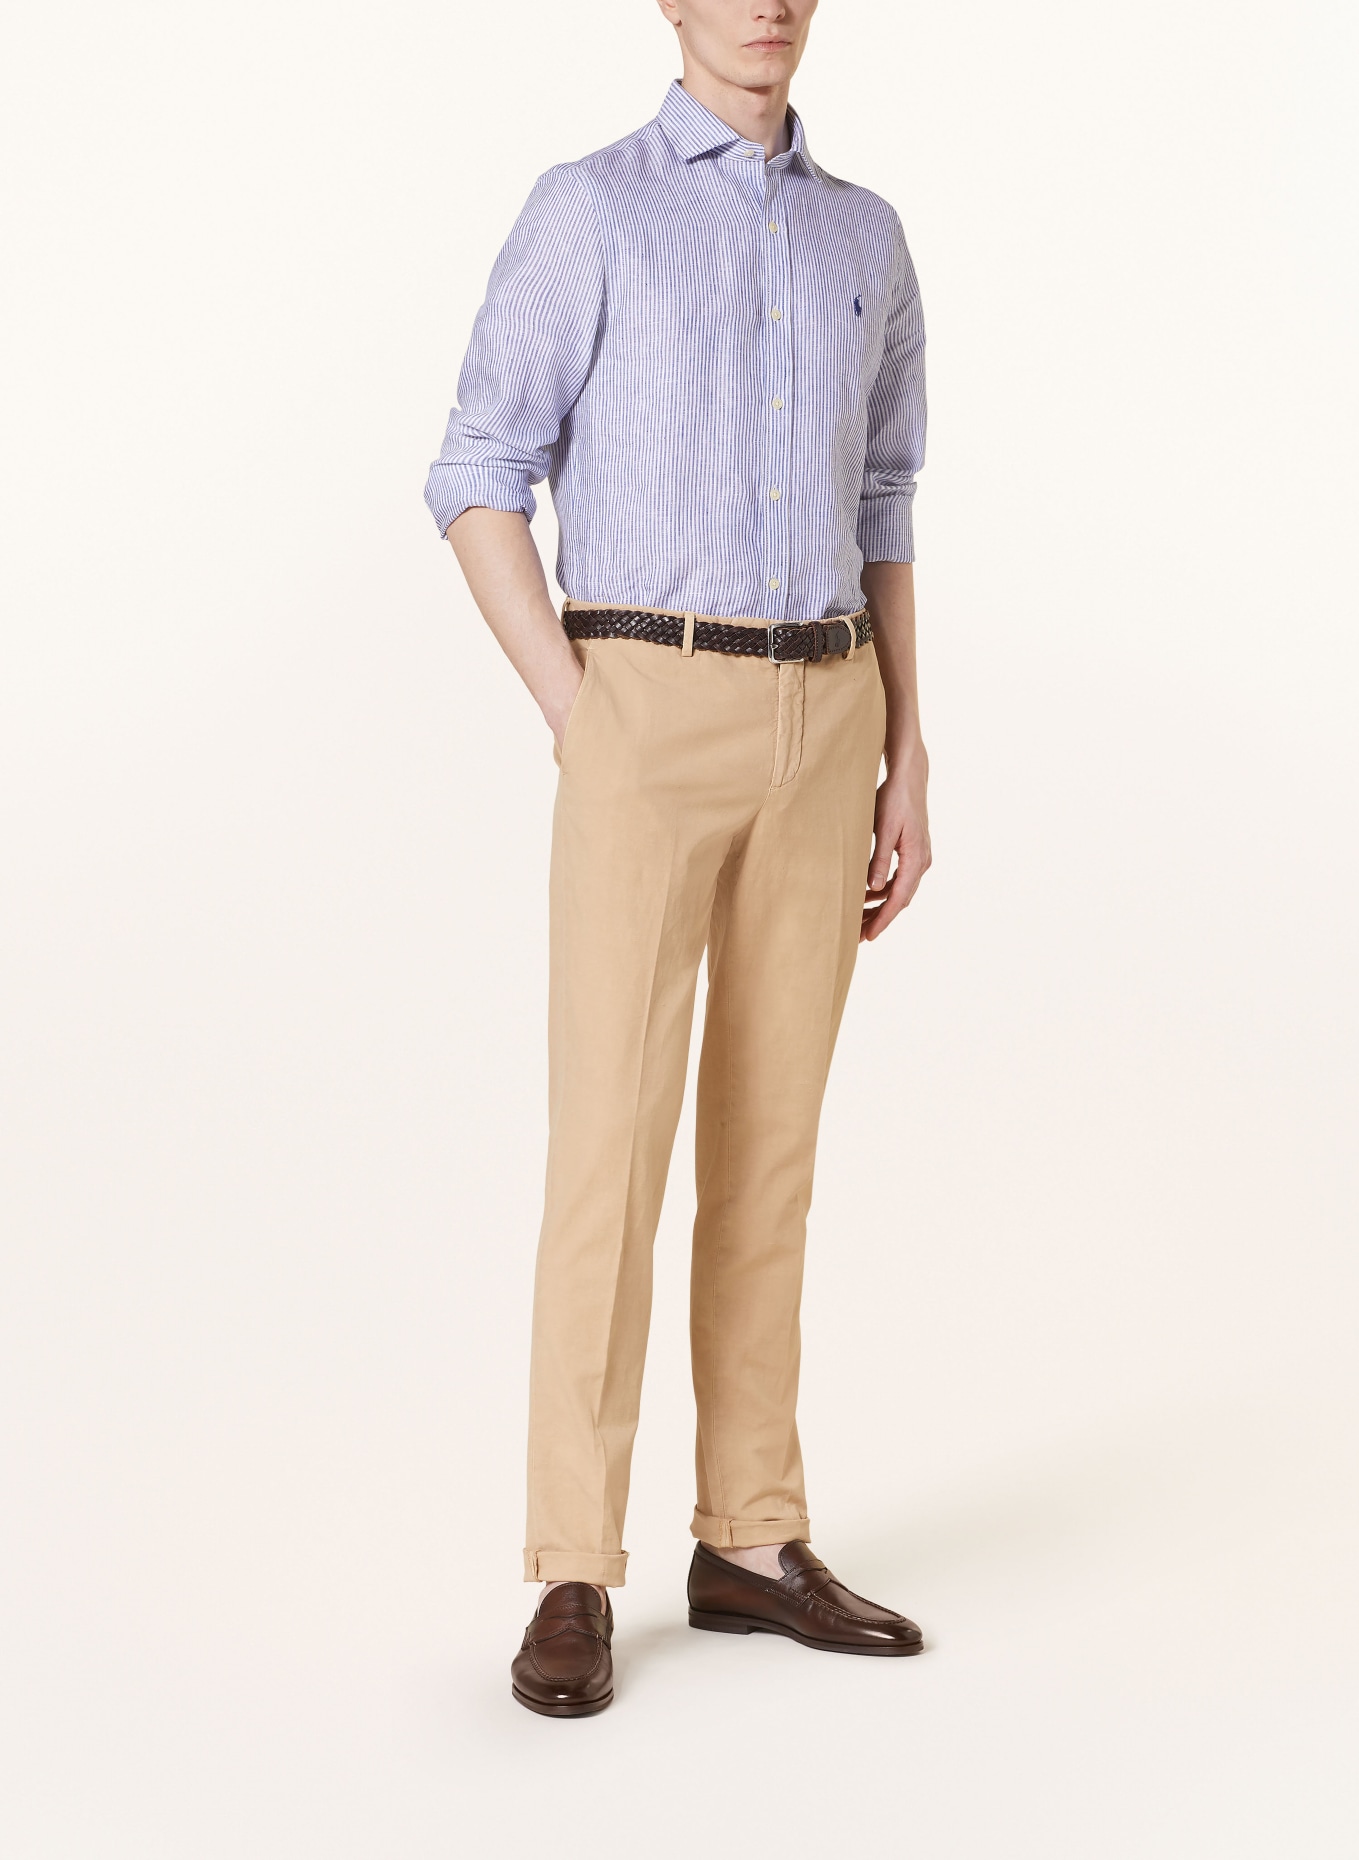 POLO RALPH LAUREN Leinenhemd Slim Fit, Farbe: WEISS/ BLAU (Bild 2)